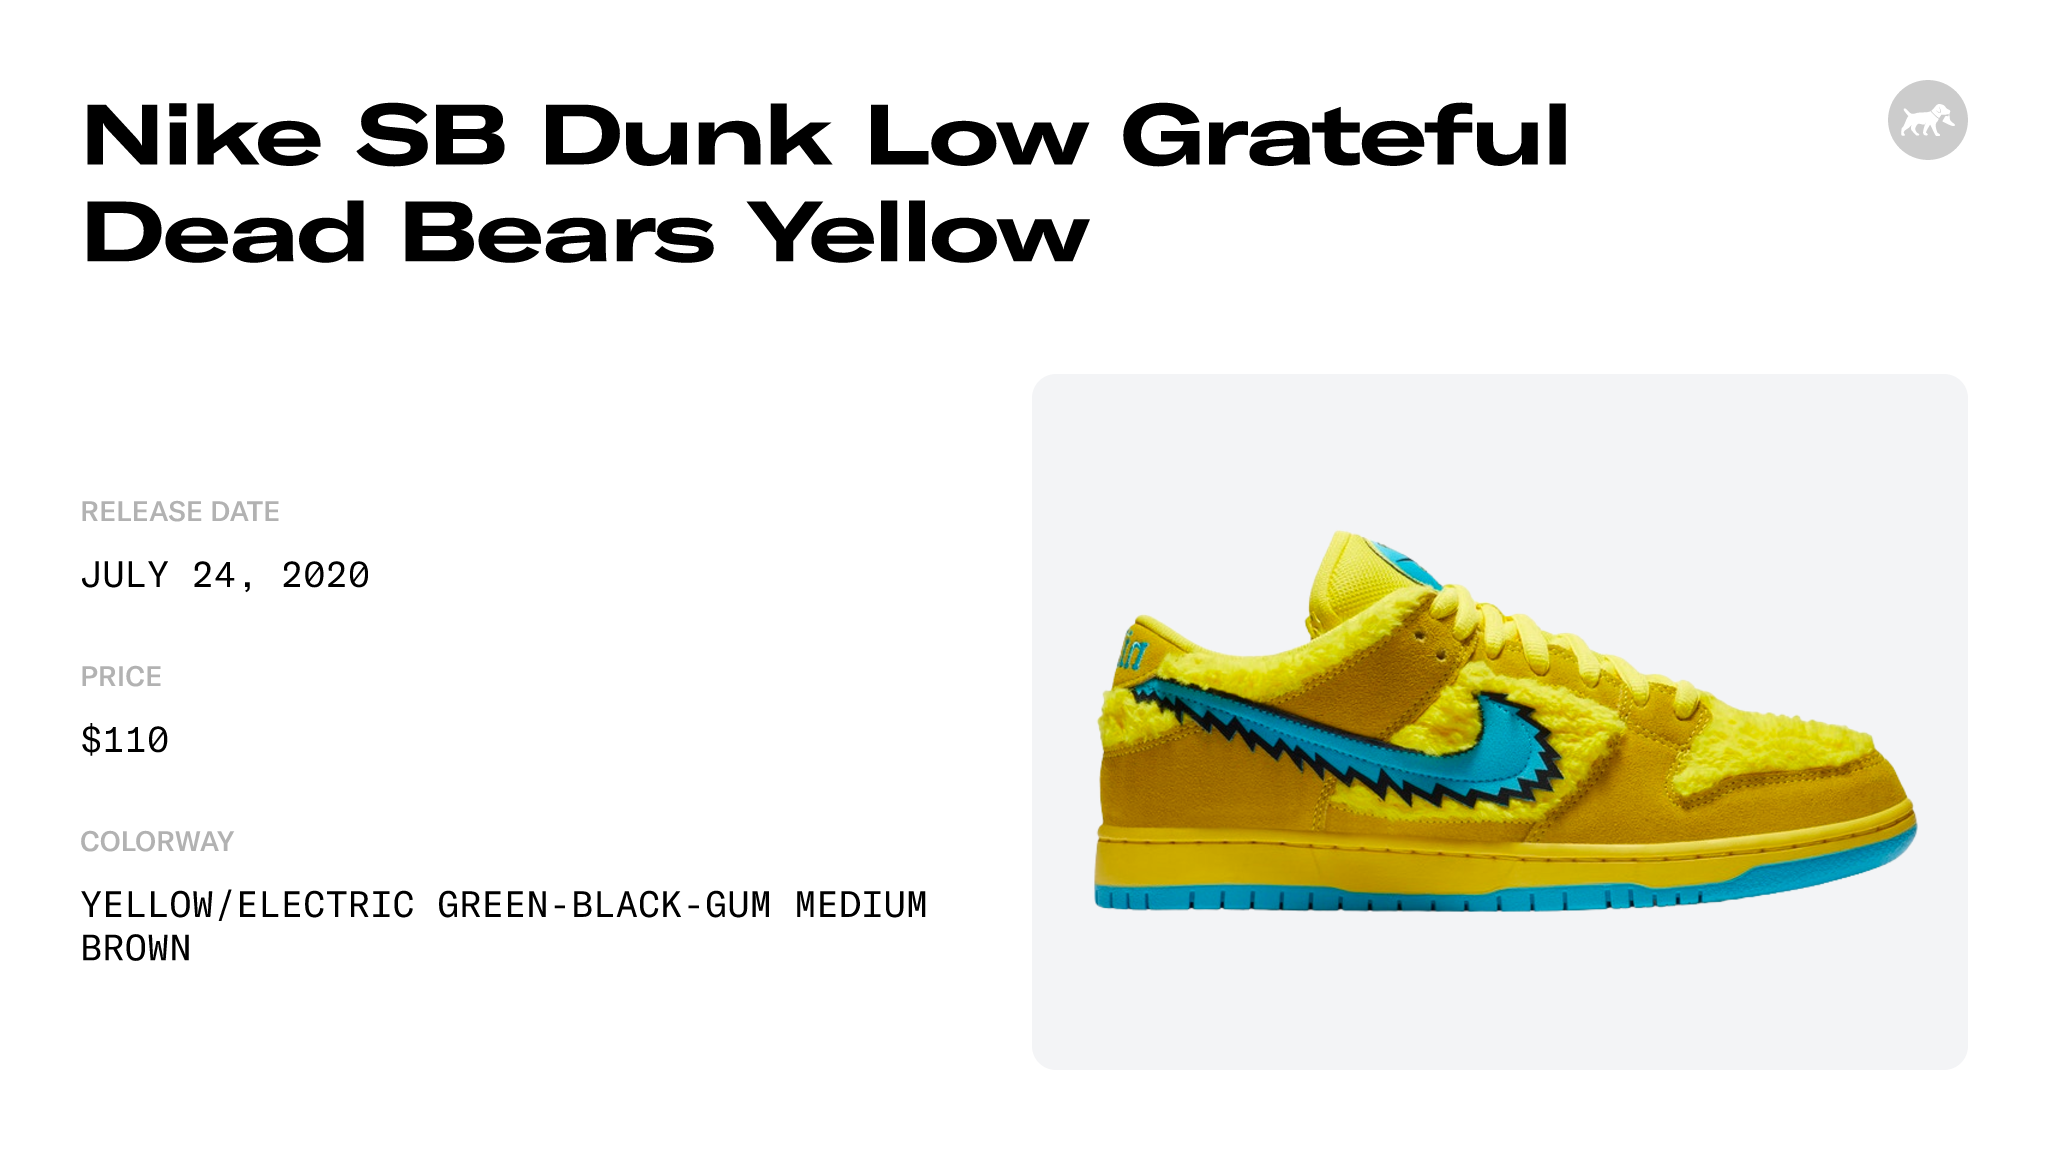 Nike SB Dunk Low Grateful Dead Bears Yellow - CJ5378-700 Raffles and  Release Date